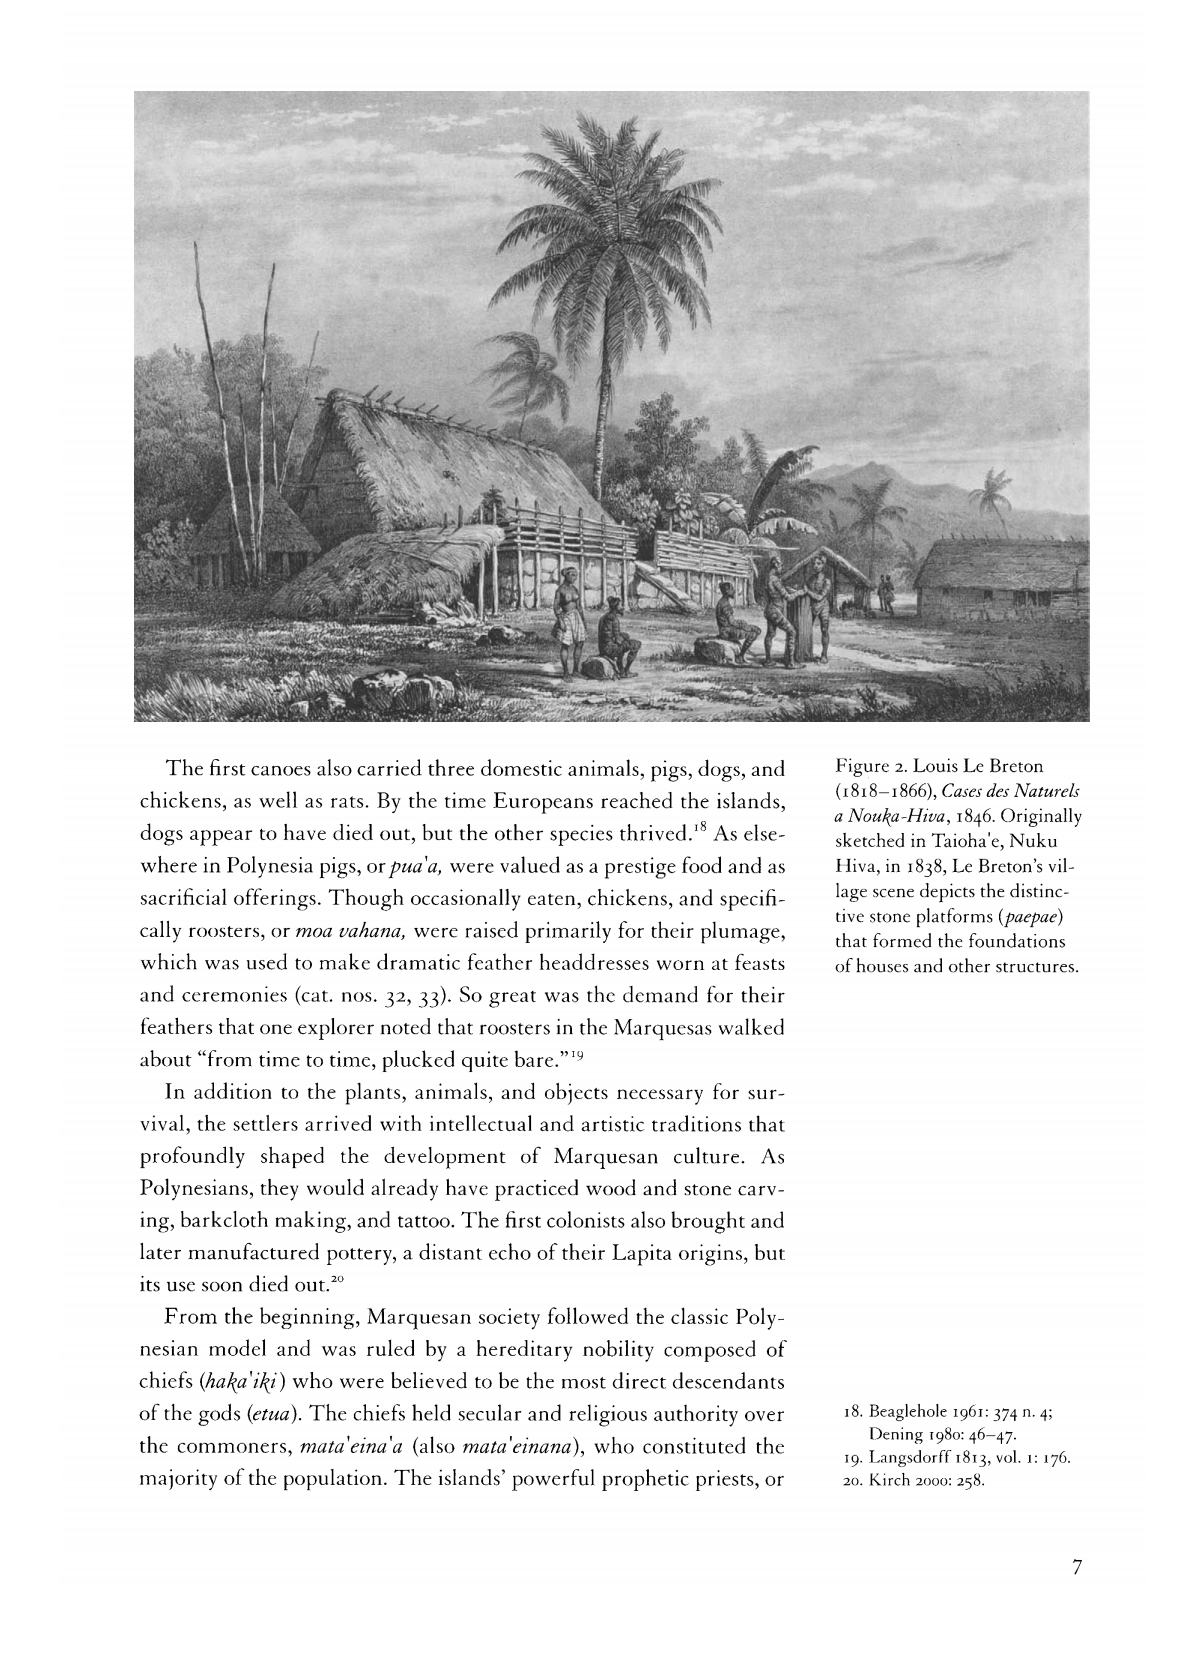 Adorning the World: Art of the Marquesas Islands / Eric Kjellgren with Carol S. Ivory. — New York : The Metropolitan Museum of Art, 2005